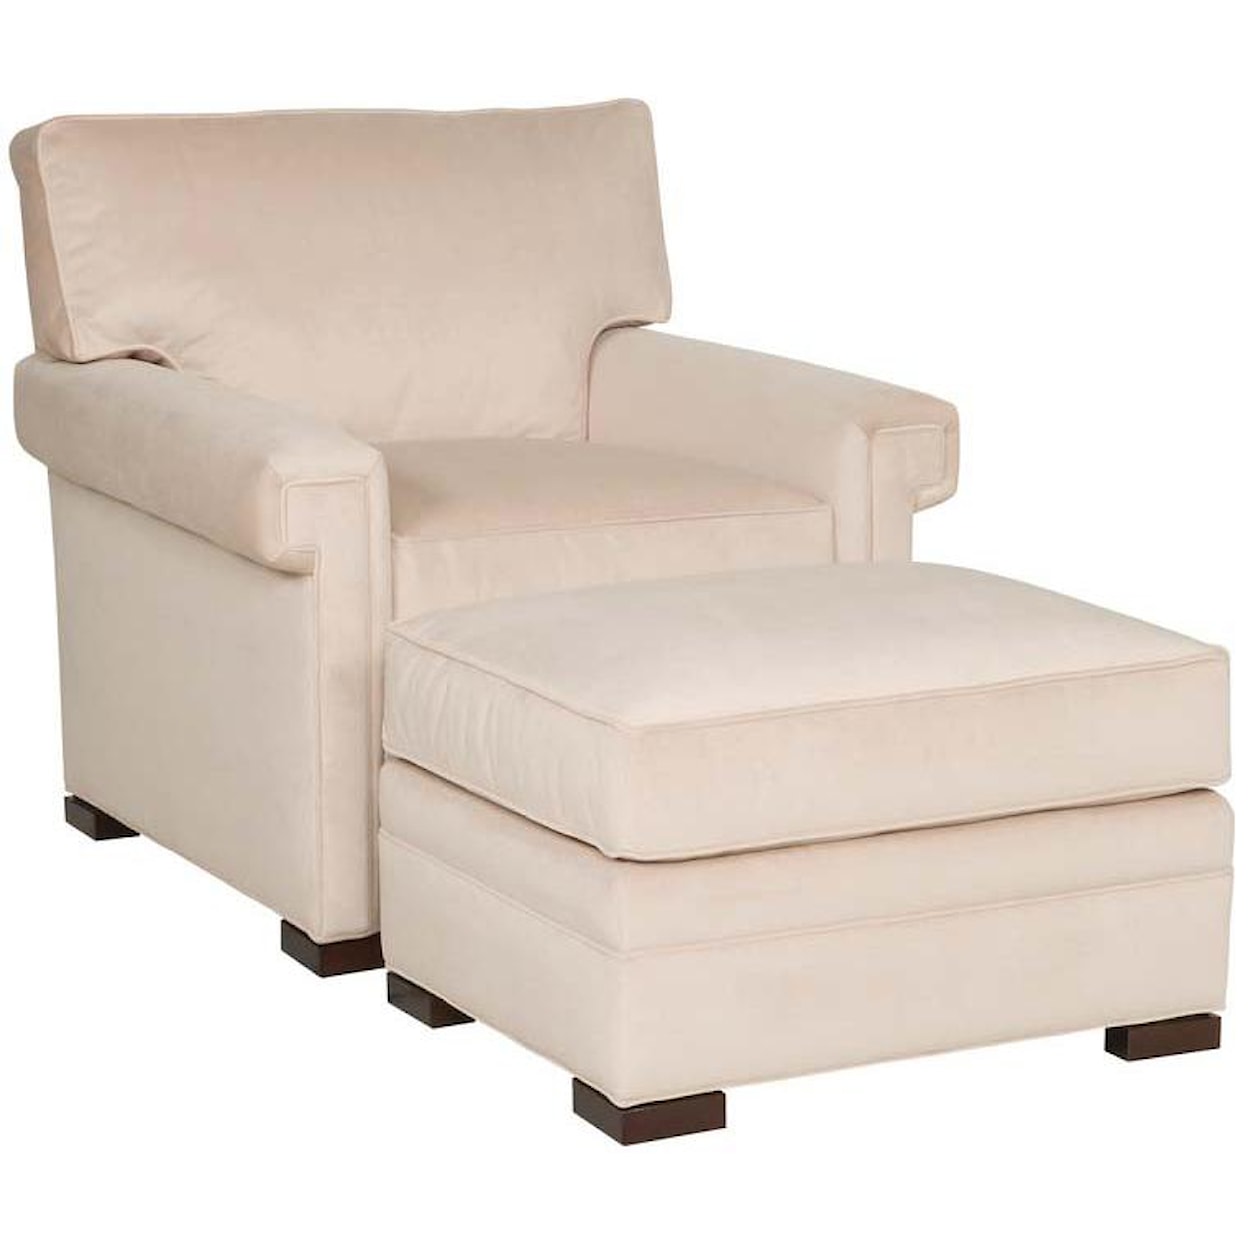 Vanguard Furniture Davidson Chair and Ottoman